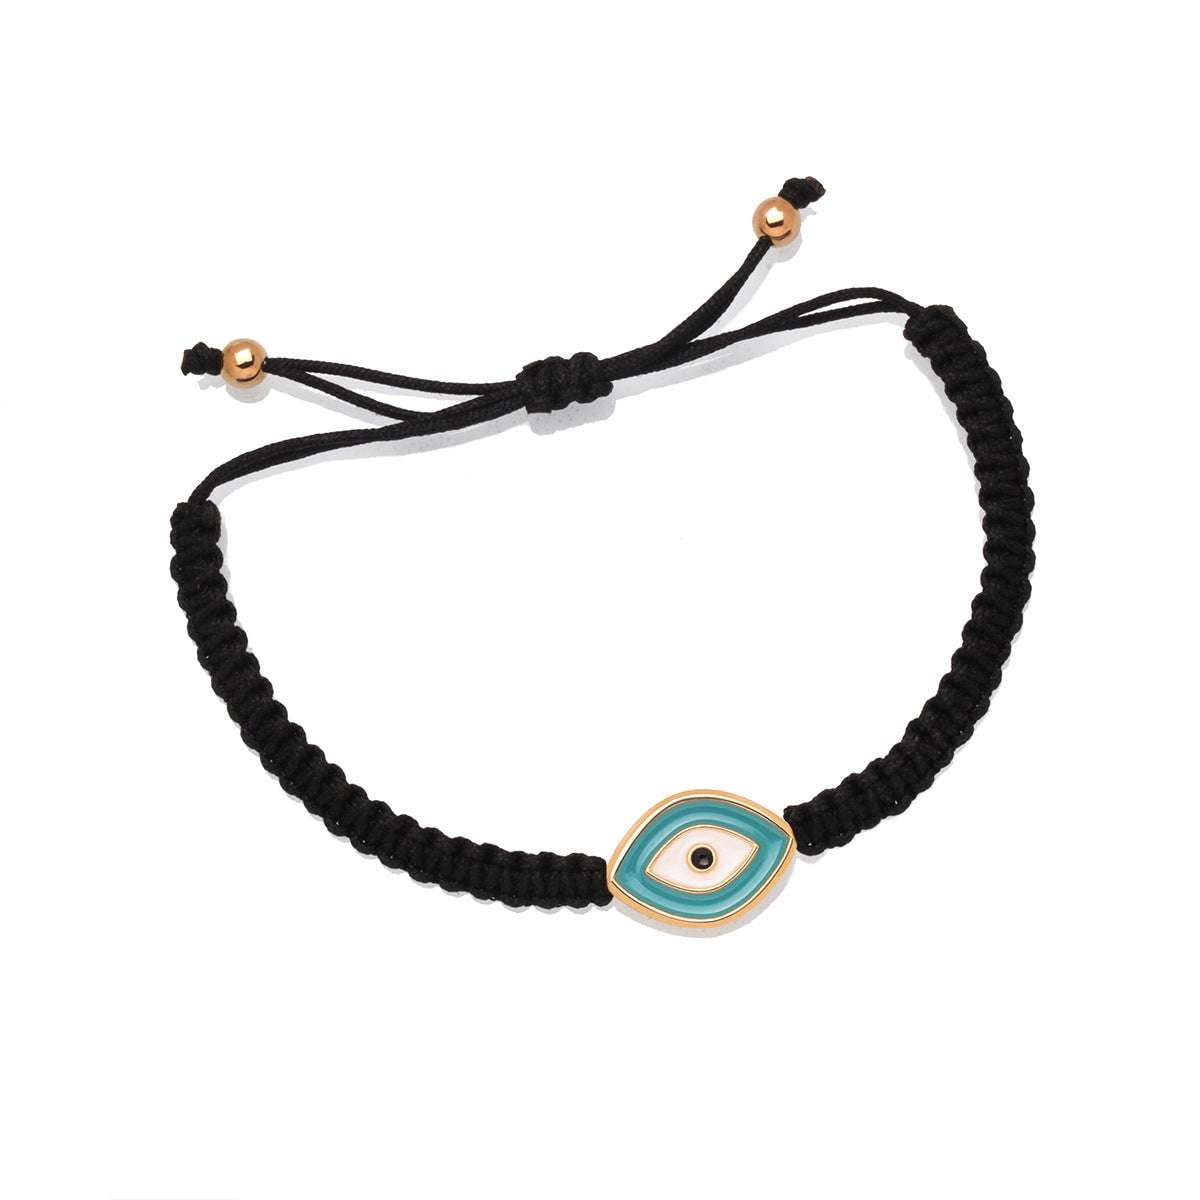 Adjustable Eye Bracelet, European Style Bracelet, Lucky Charm Bracelet - available at Sparq Mart